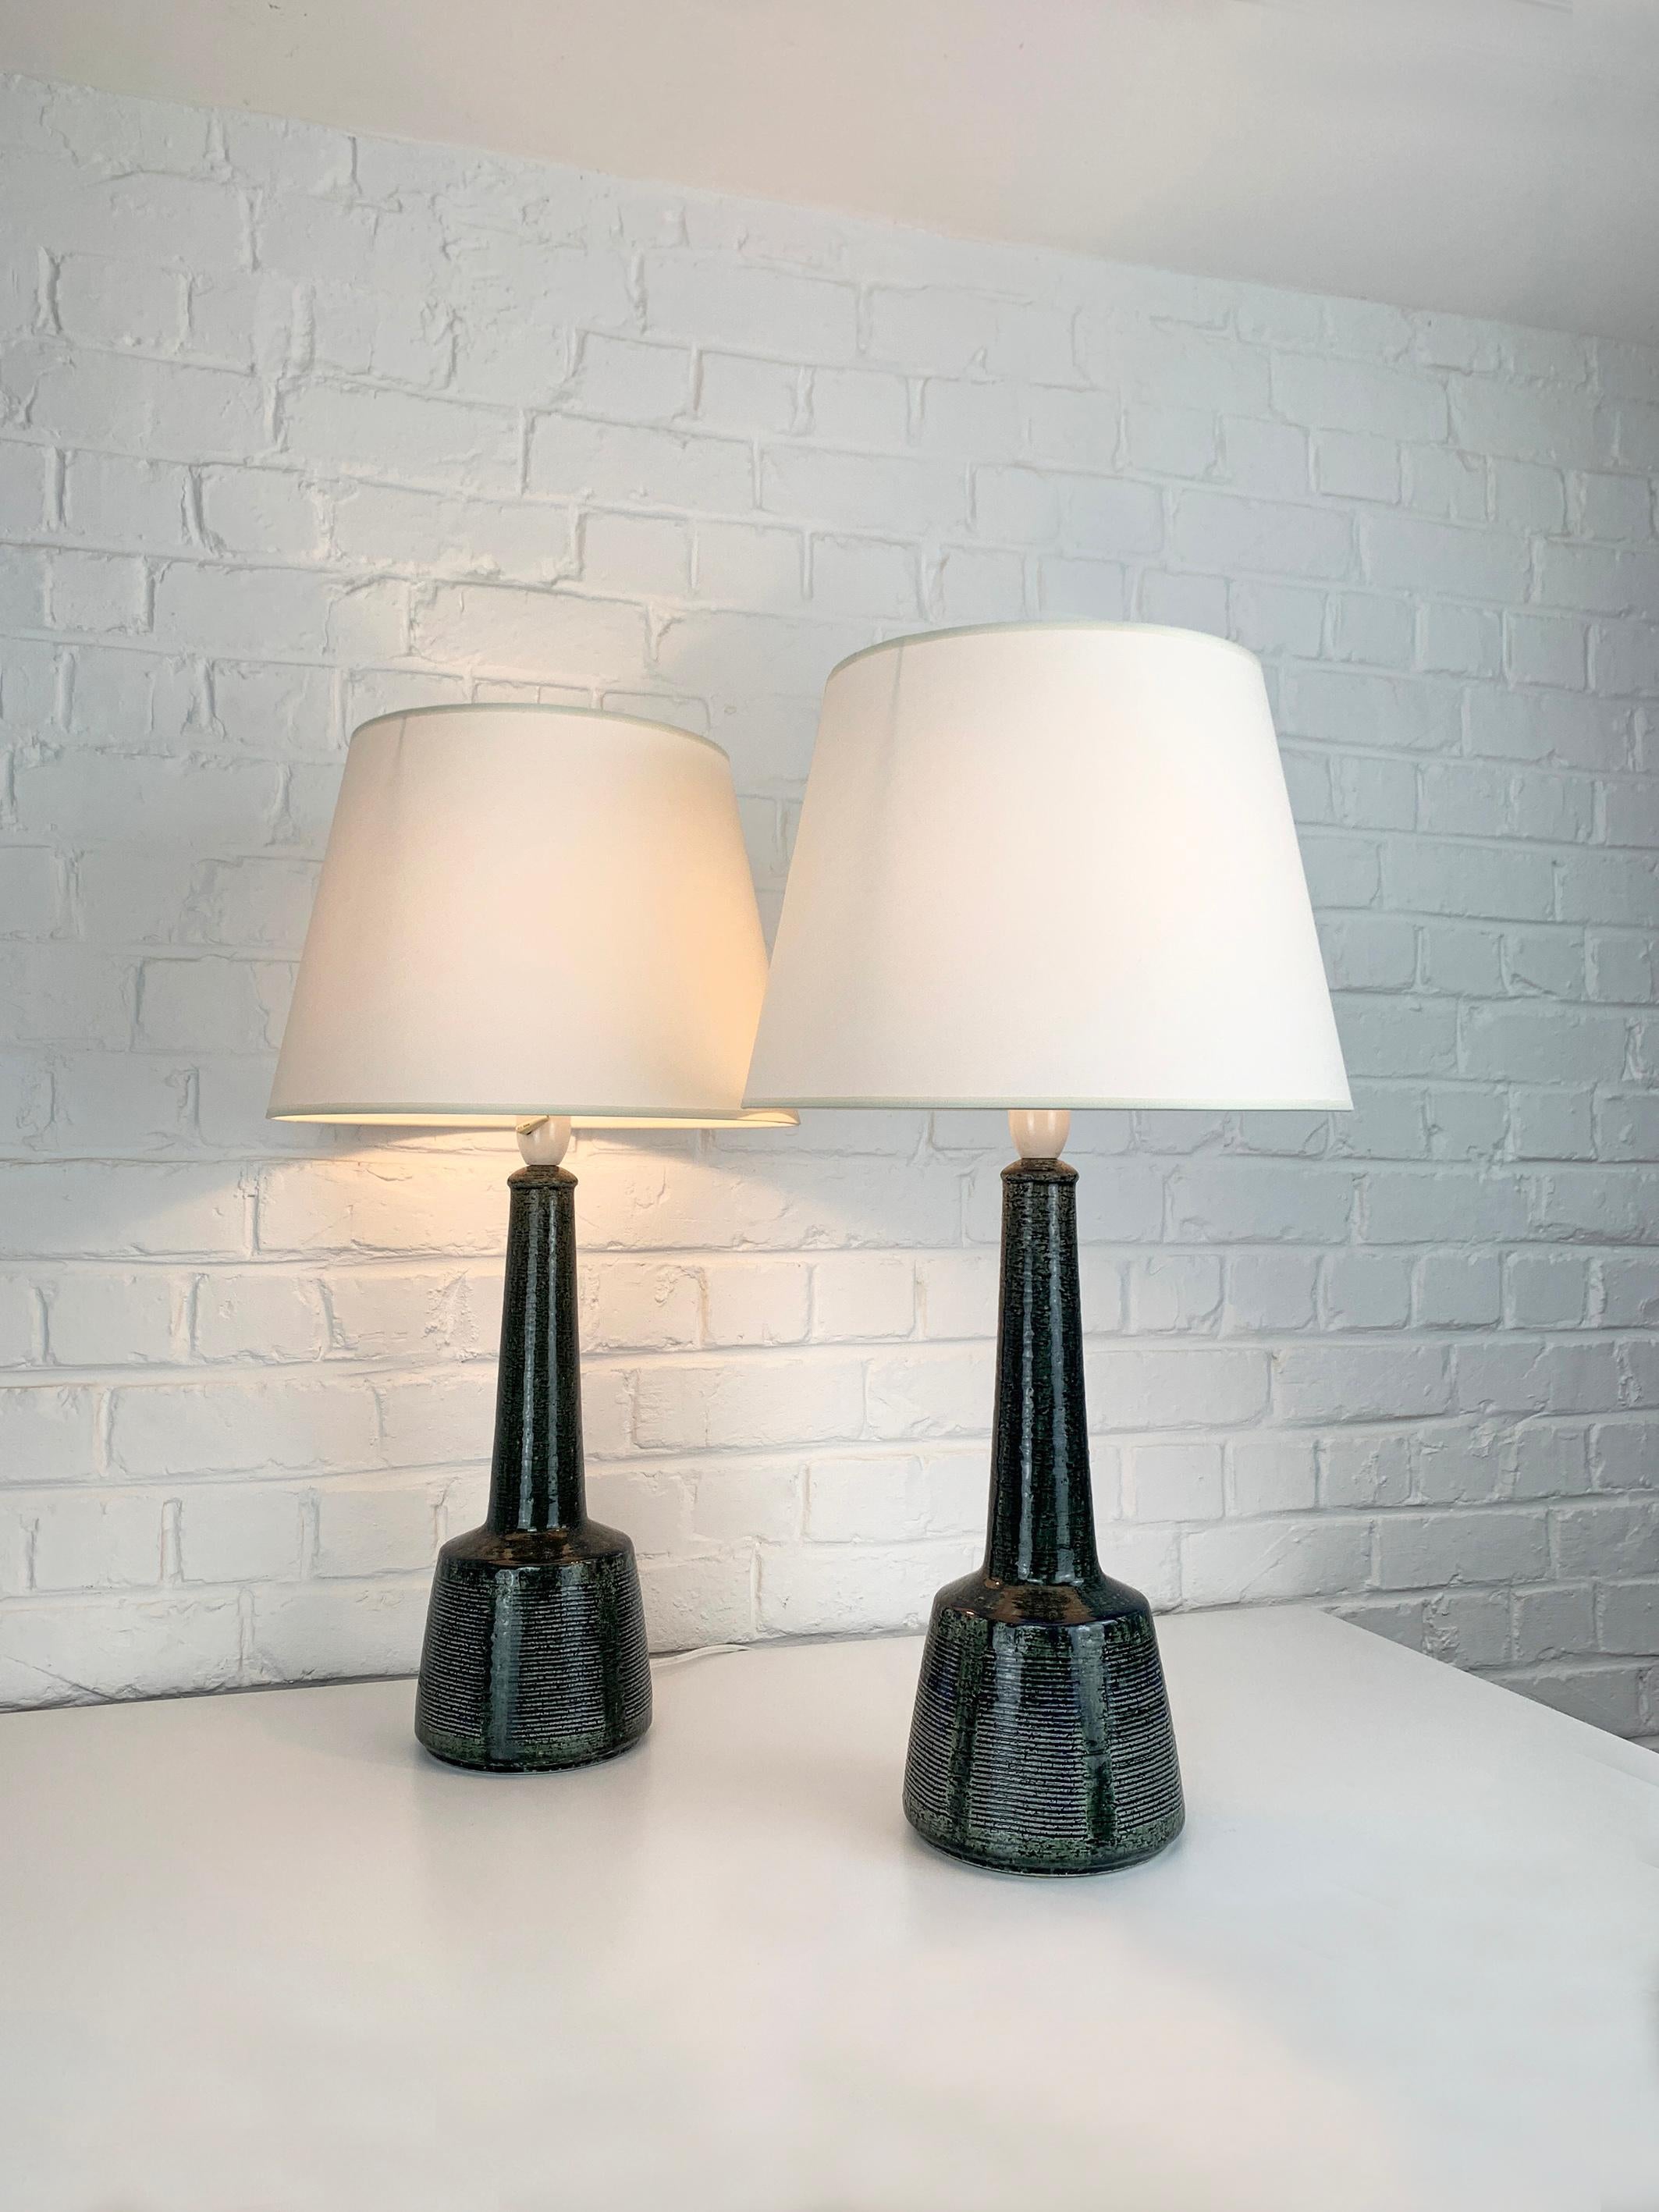 Danish Pair of Tall Ceramic table lamps by Palshus, design by Esben Klint for Le Klint